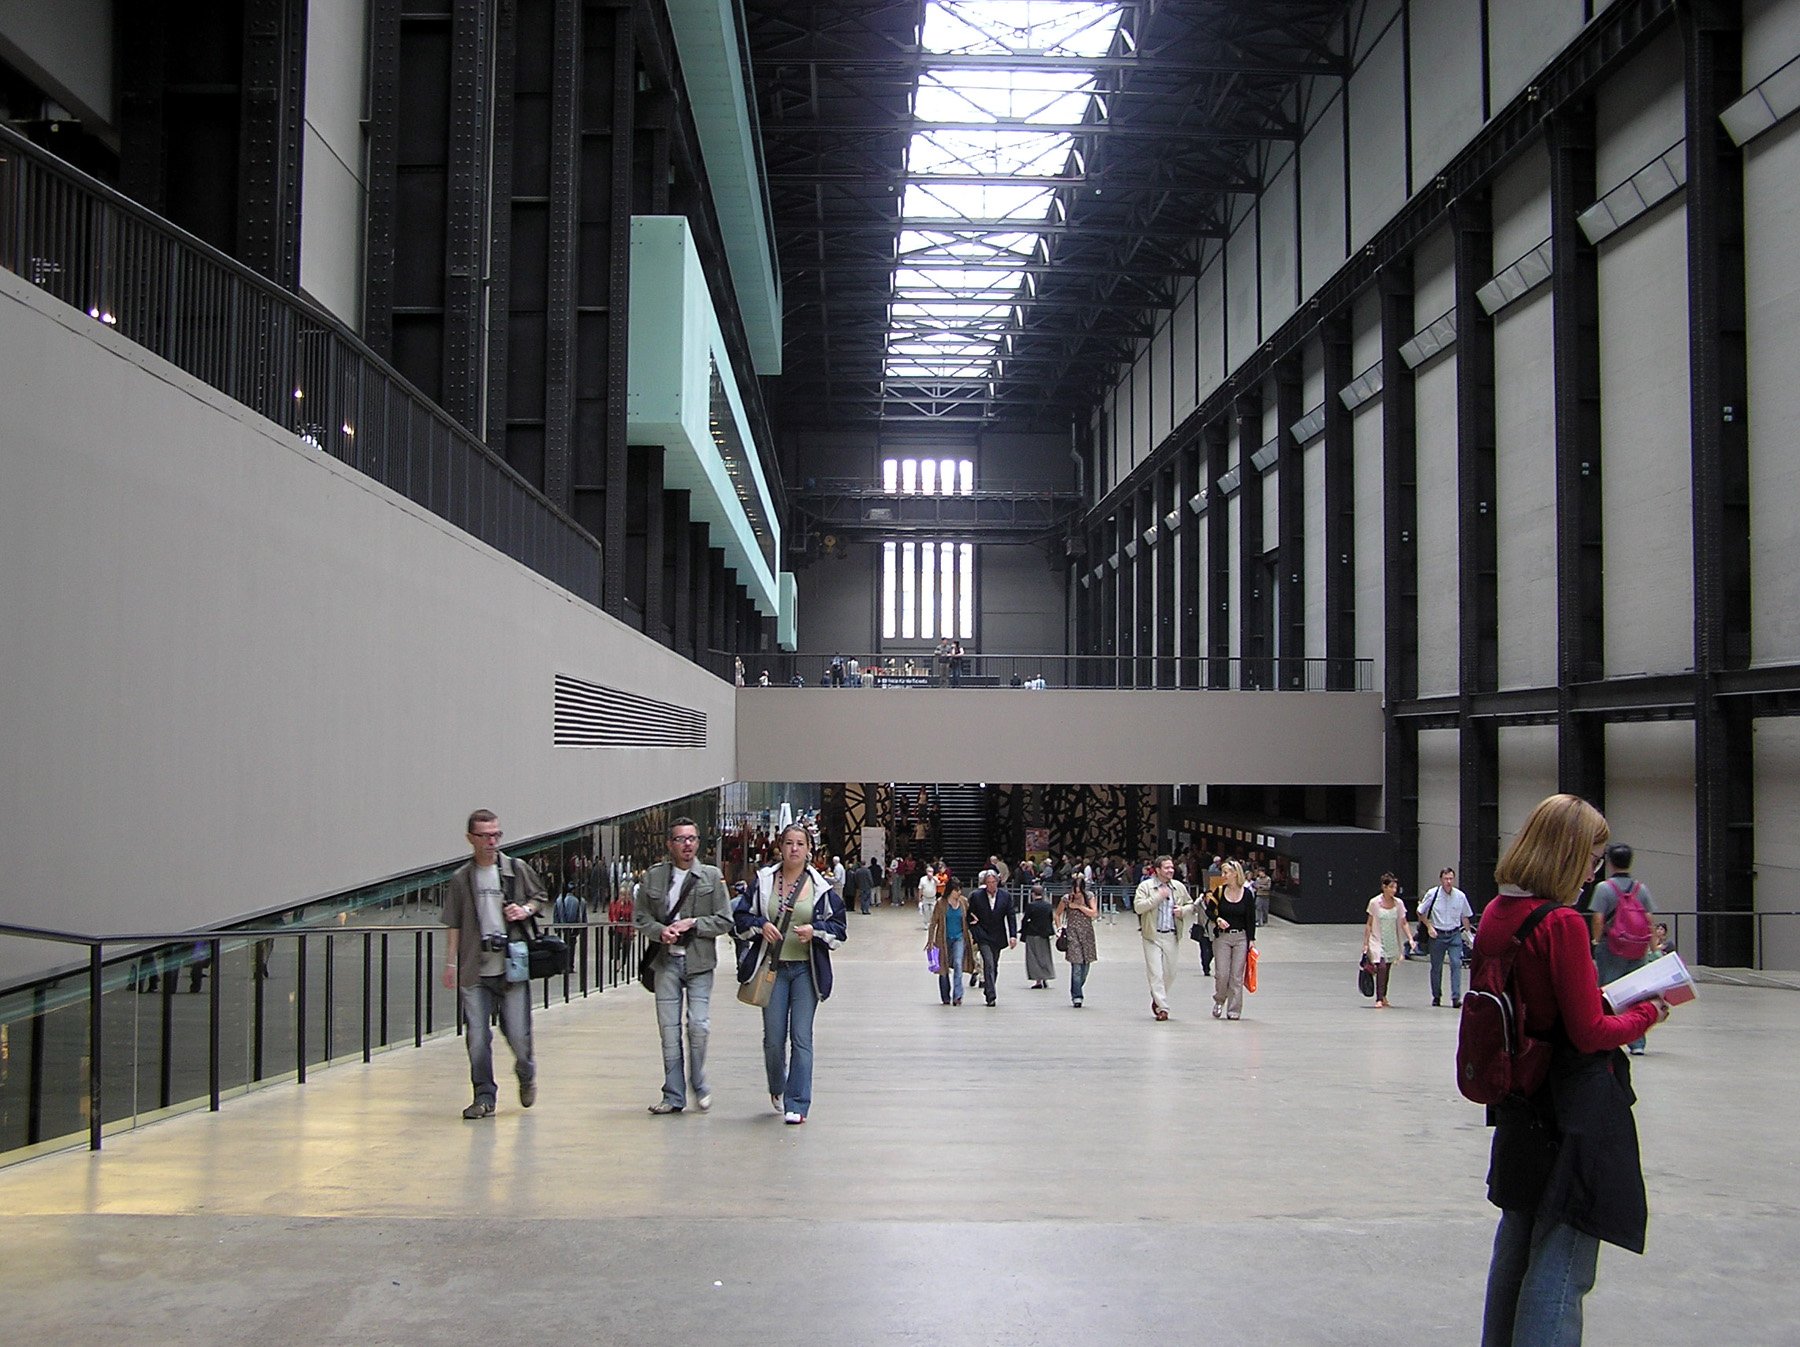 Tate modern